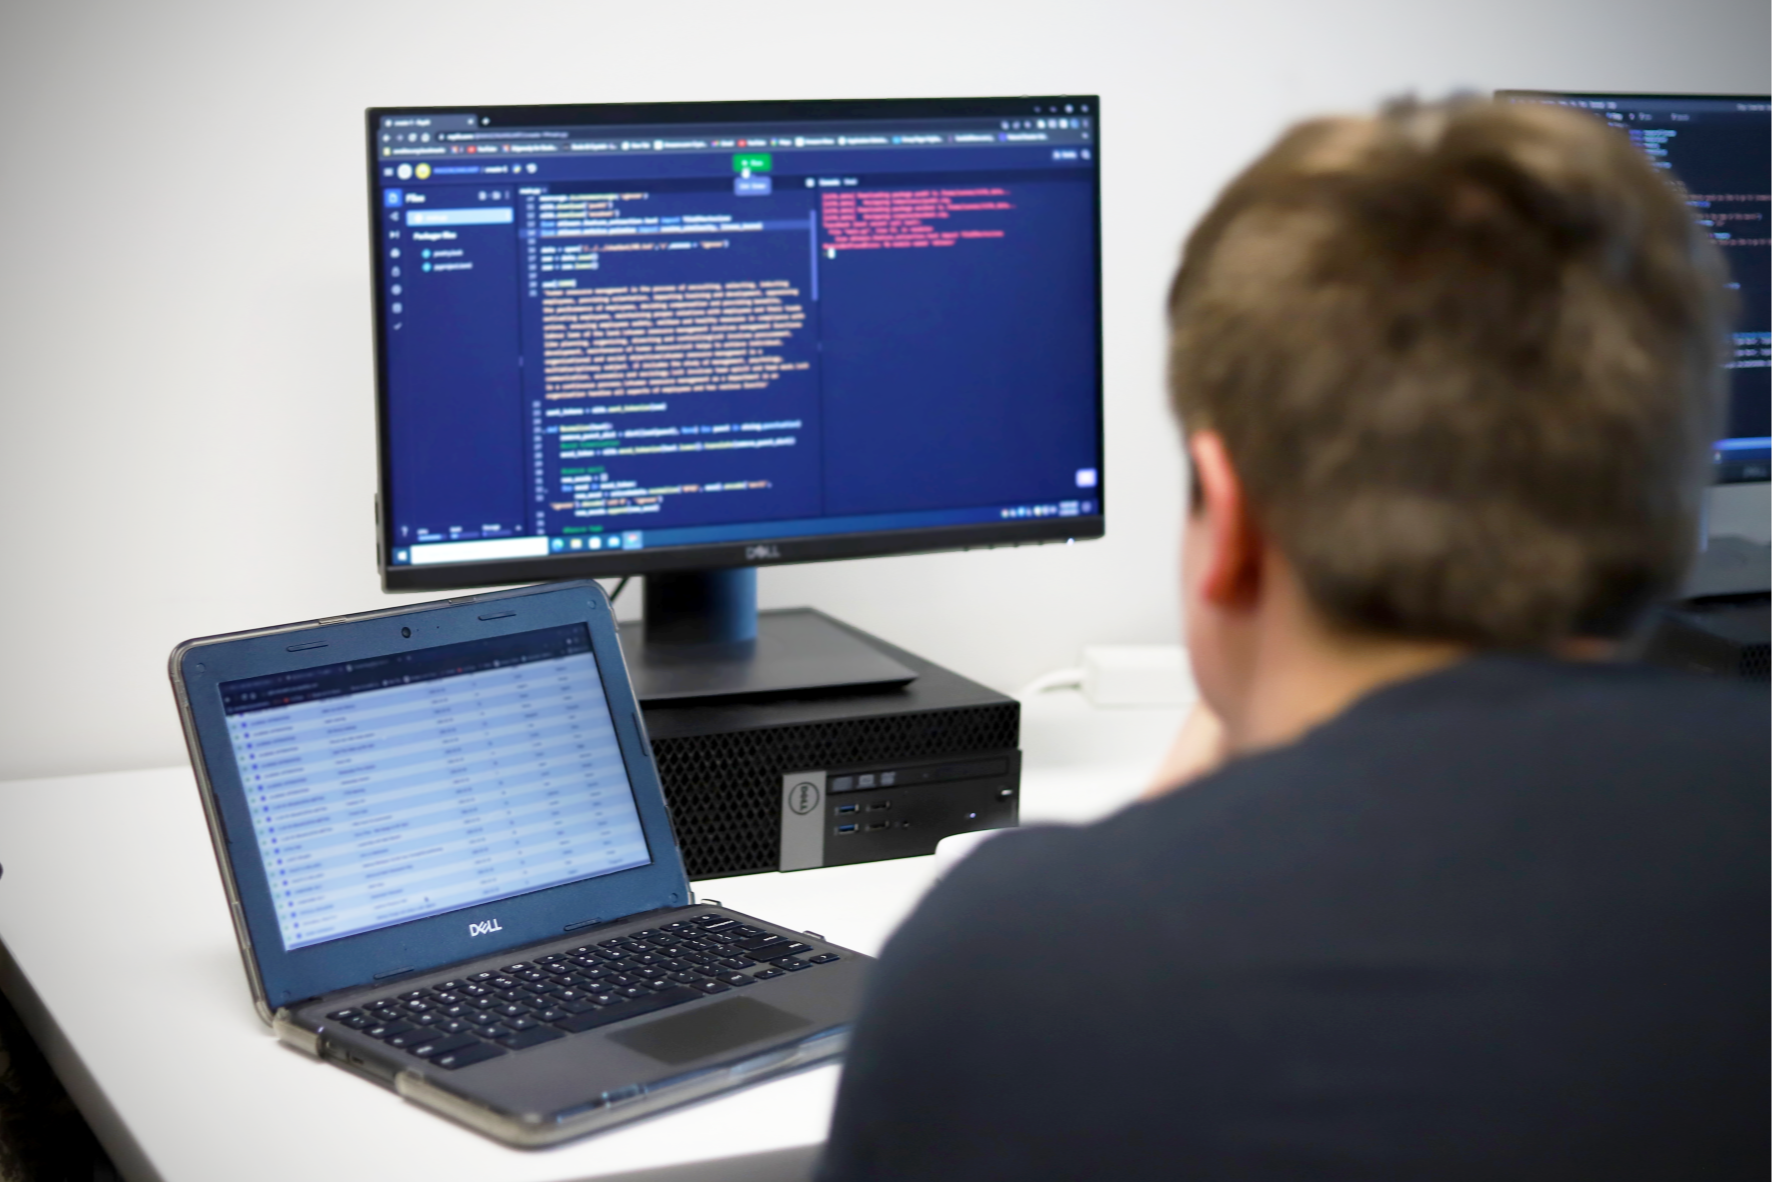 High school computer science student looking at desktop screen and laptop screen displaying programming code